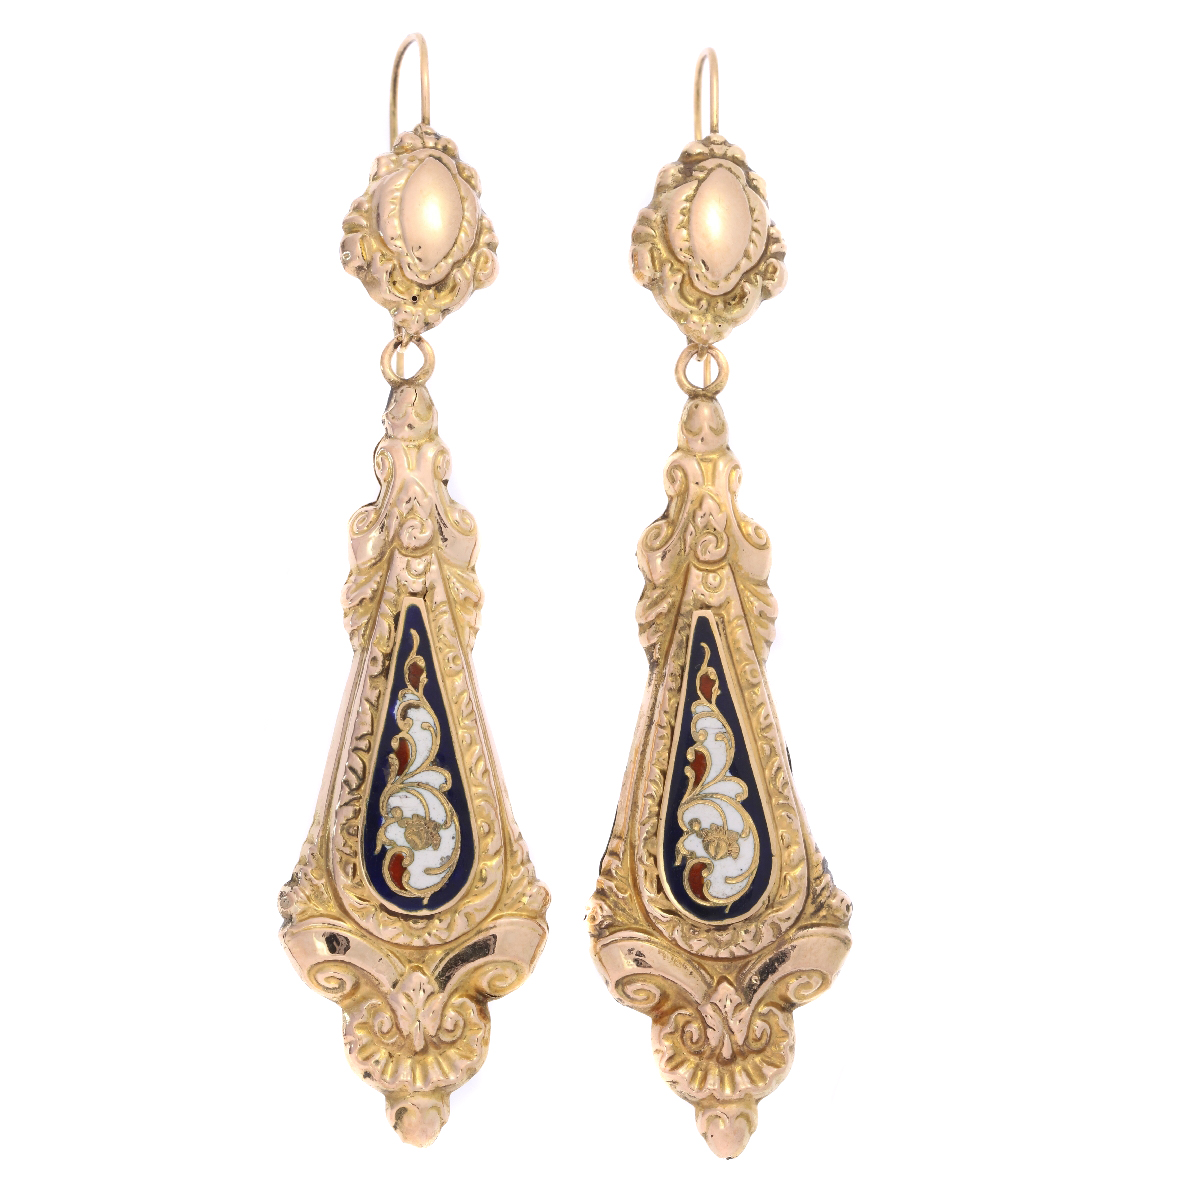 Antique gold dangle earrings with enamel Victorian era